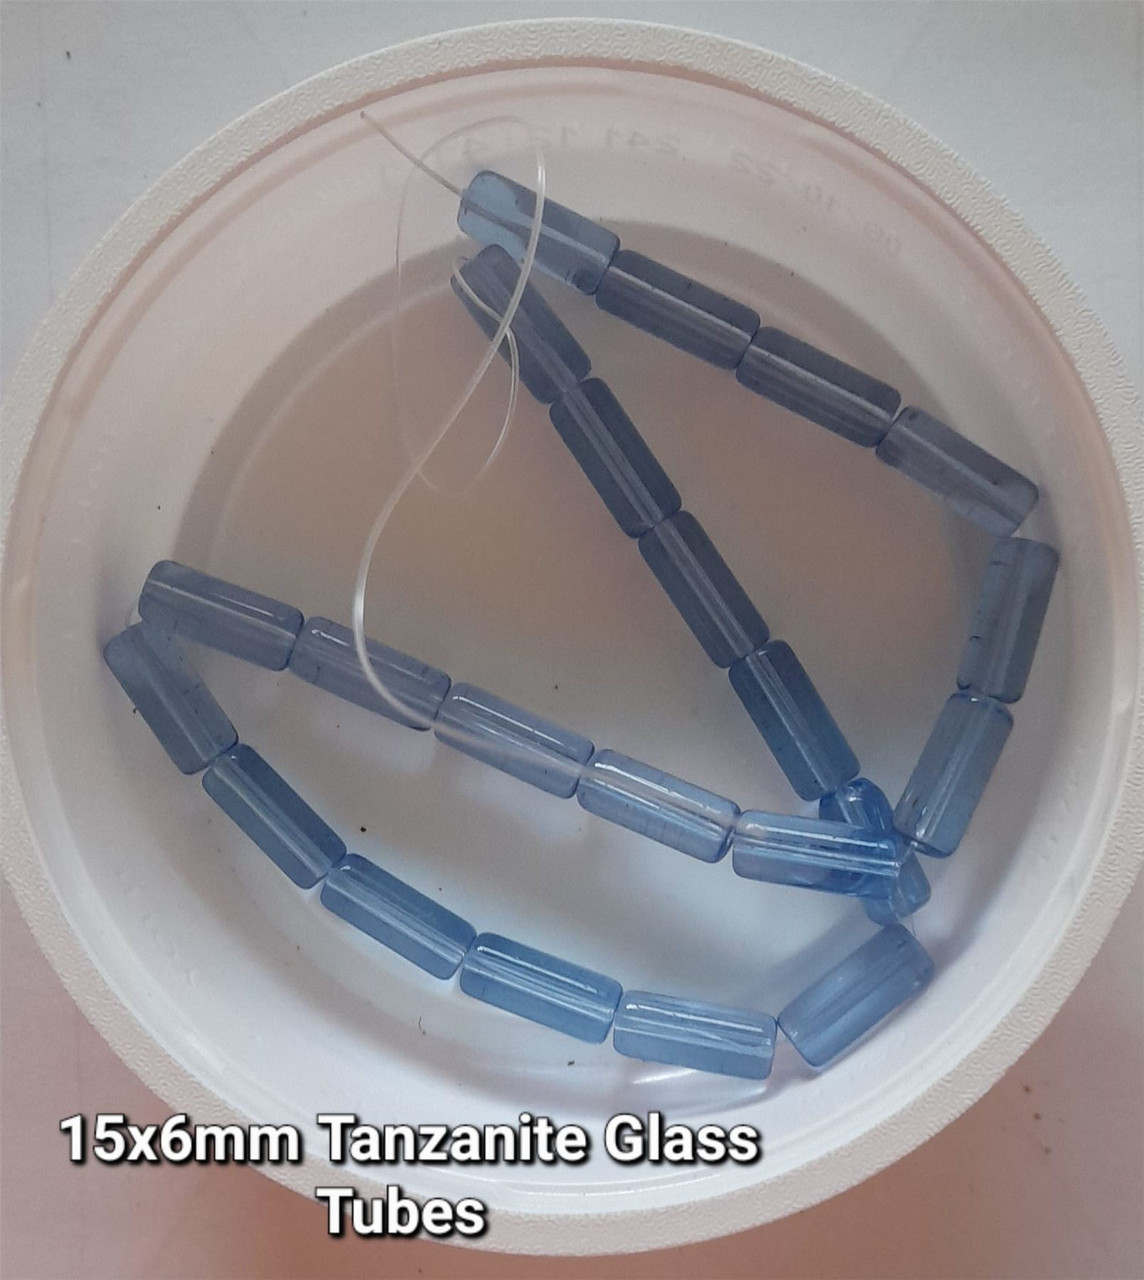 15x6mm Glass Tube Beads, TANZANITE (LT BLUE), approx 12" strand, 22 beads